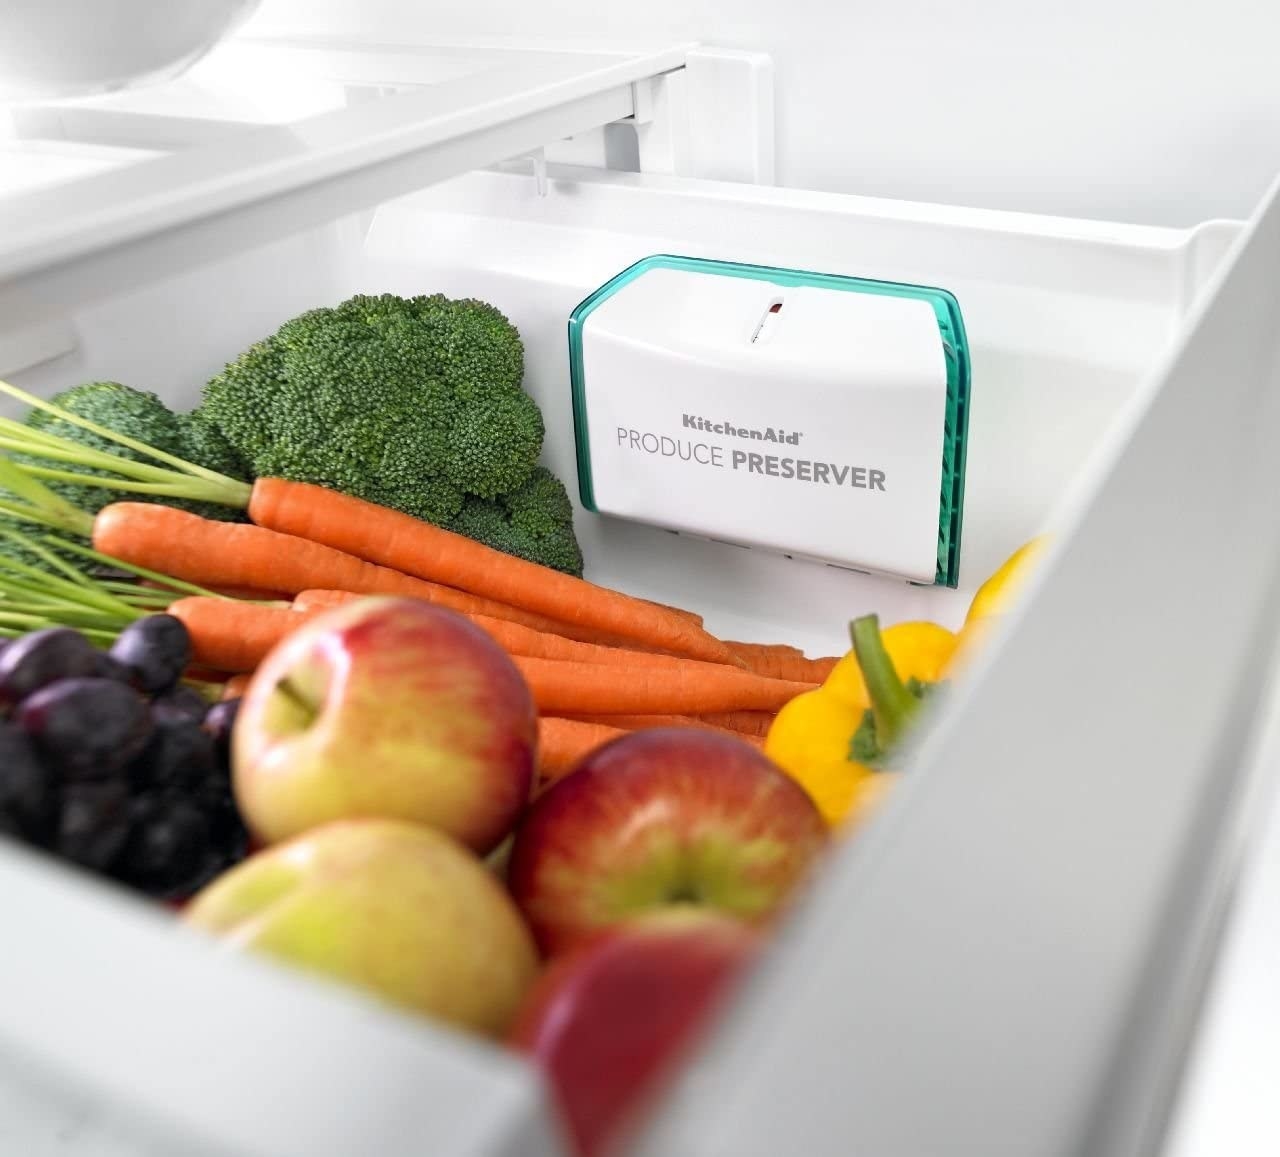 the produce preserver in a fridge bin next to veggies